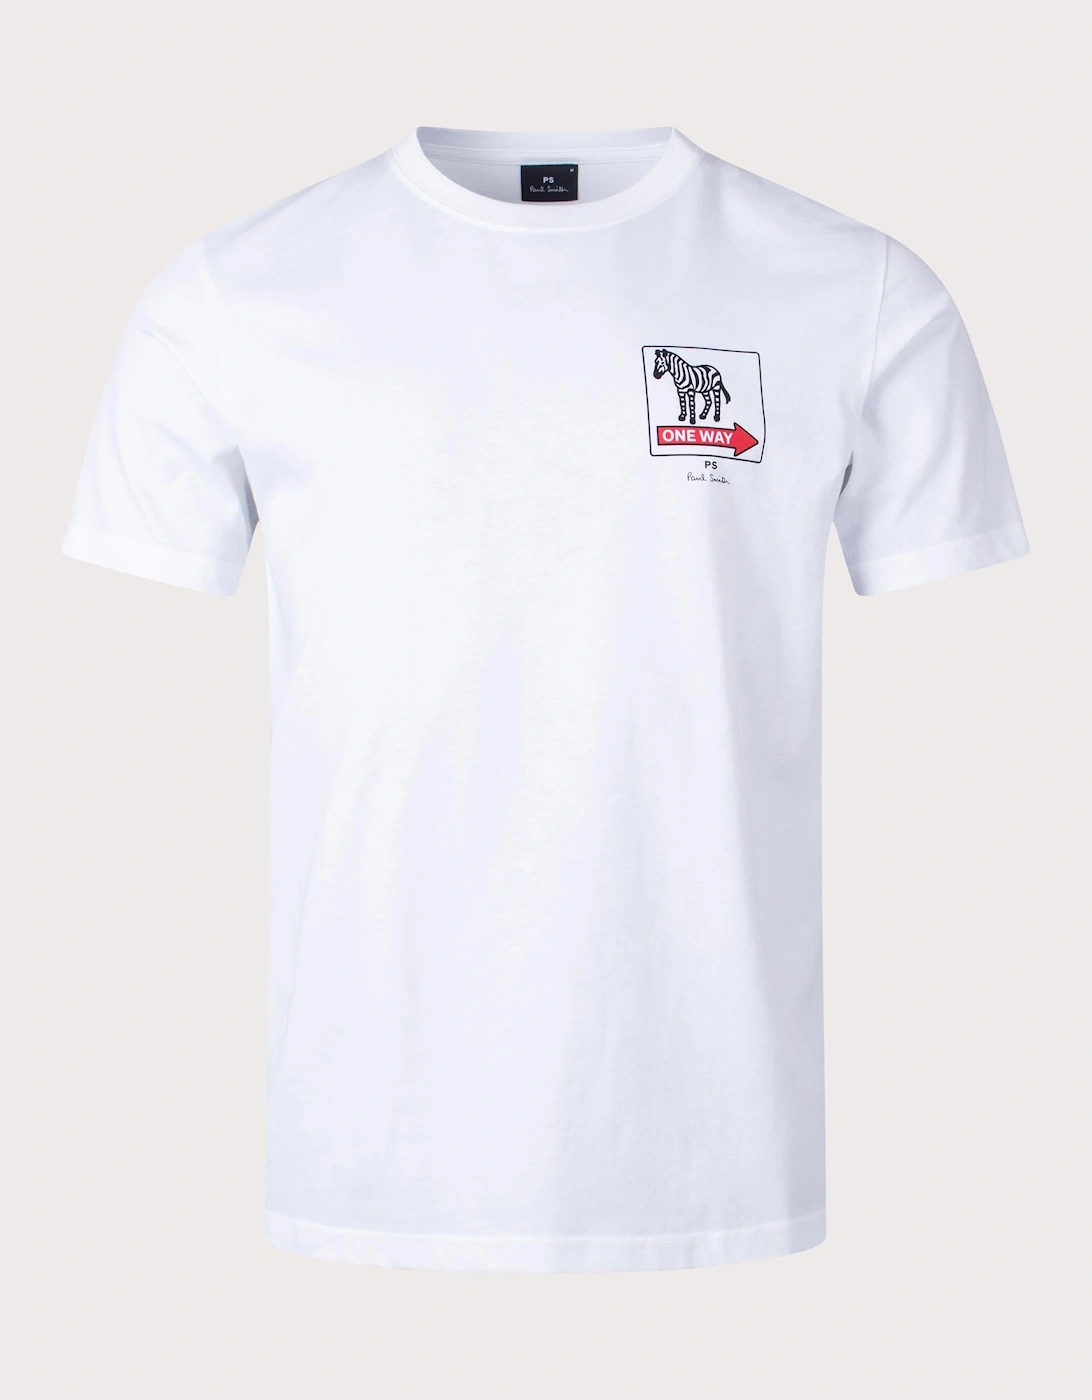 One Way Zebra T-Shirt